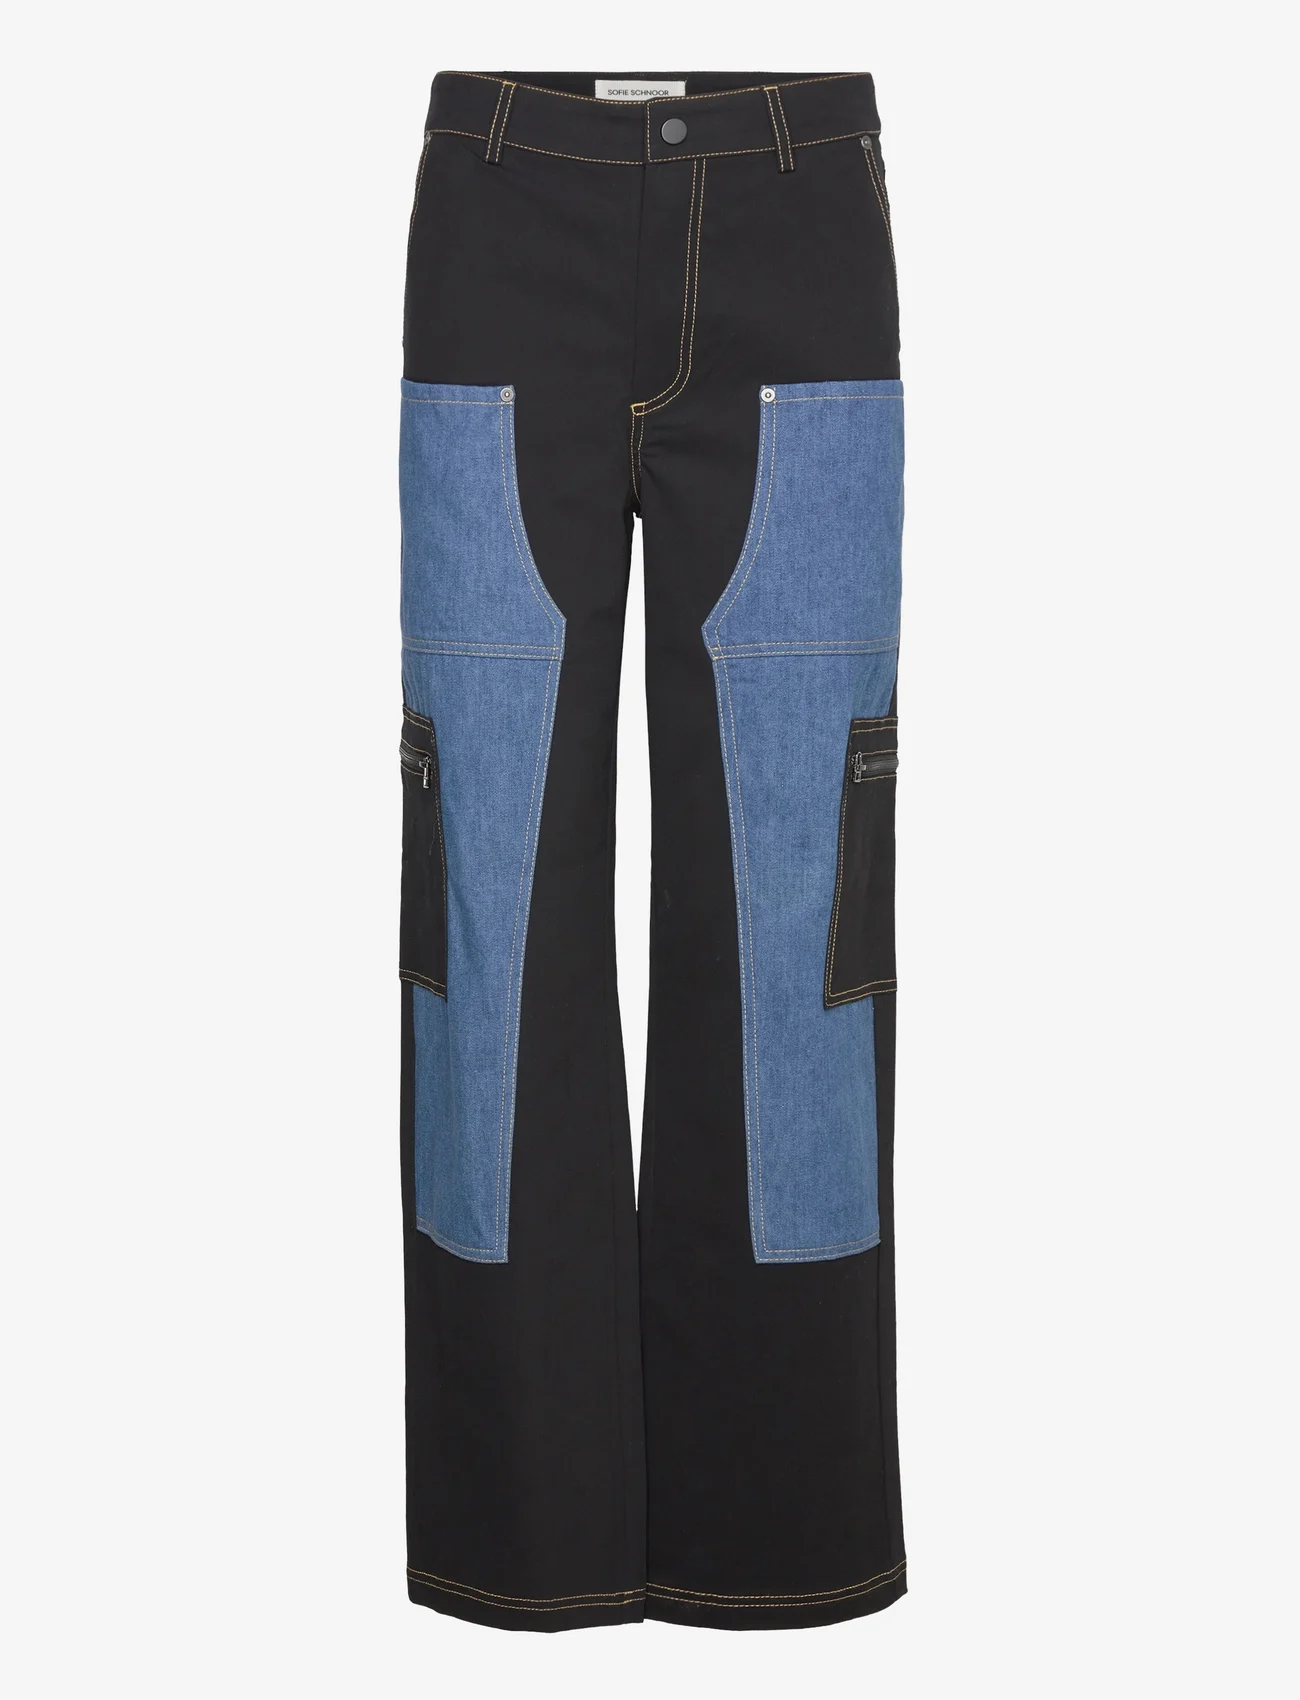 Sofie Schnoor - Trousers - brede jeans - black - 0